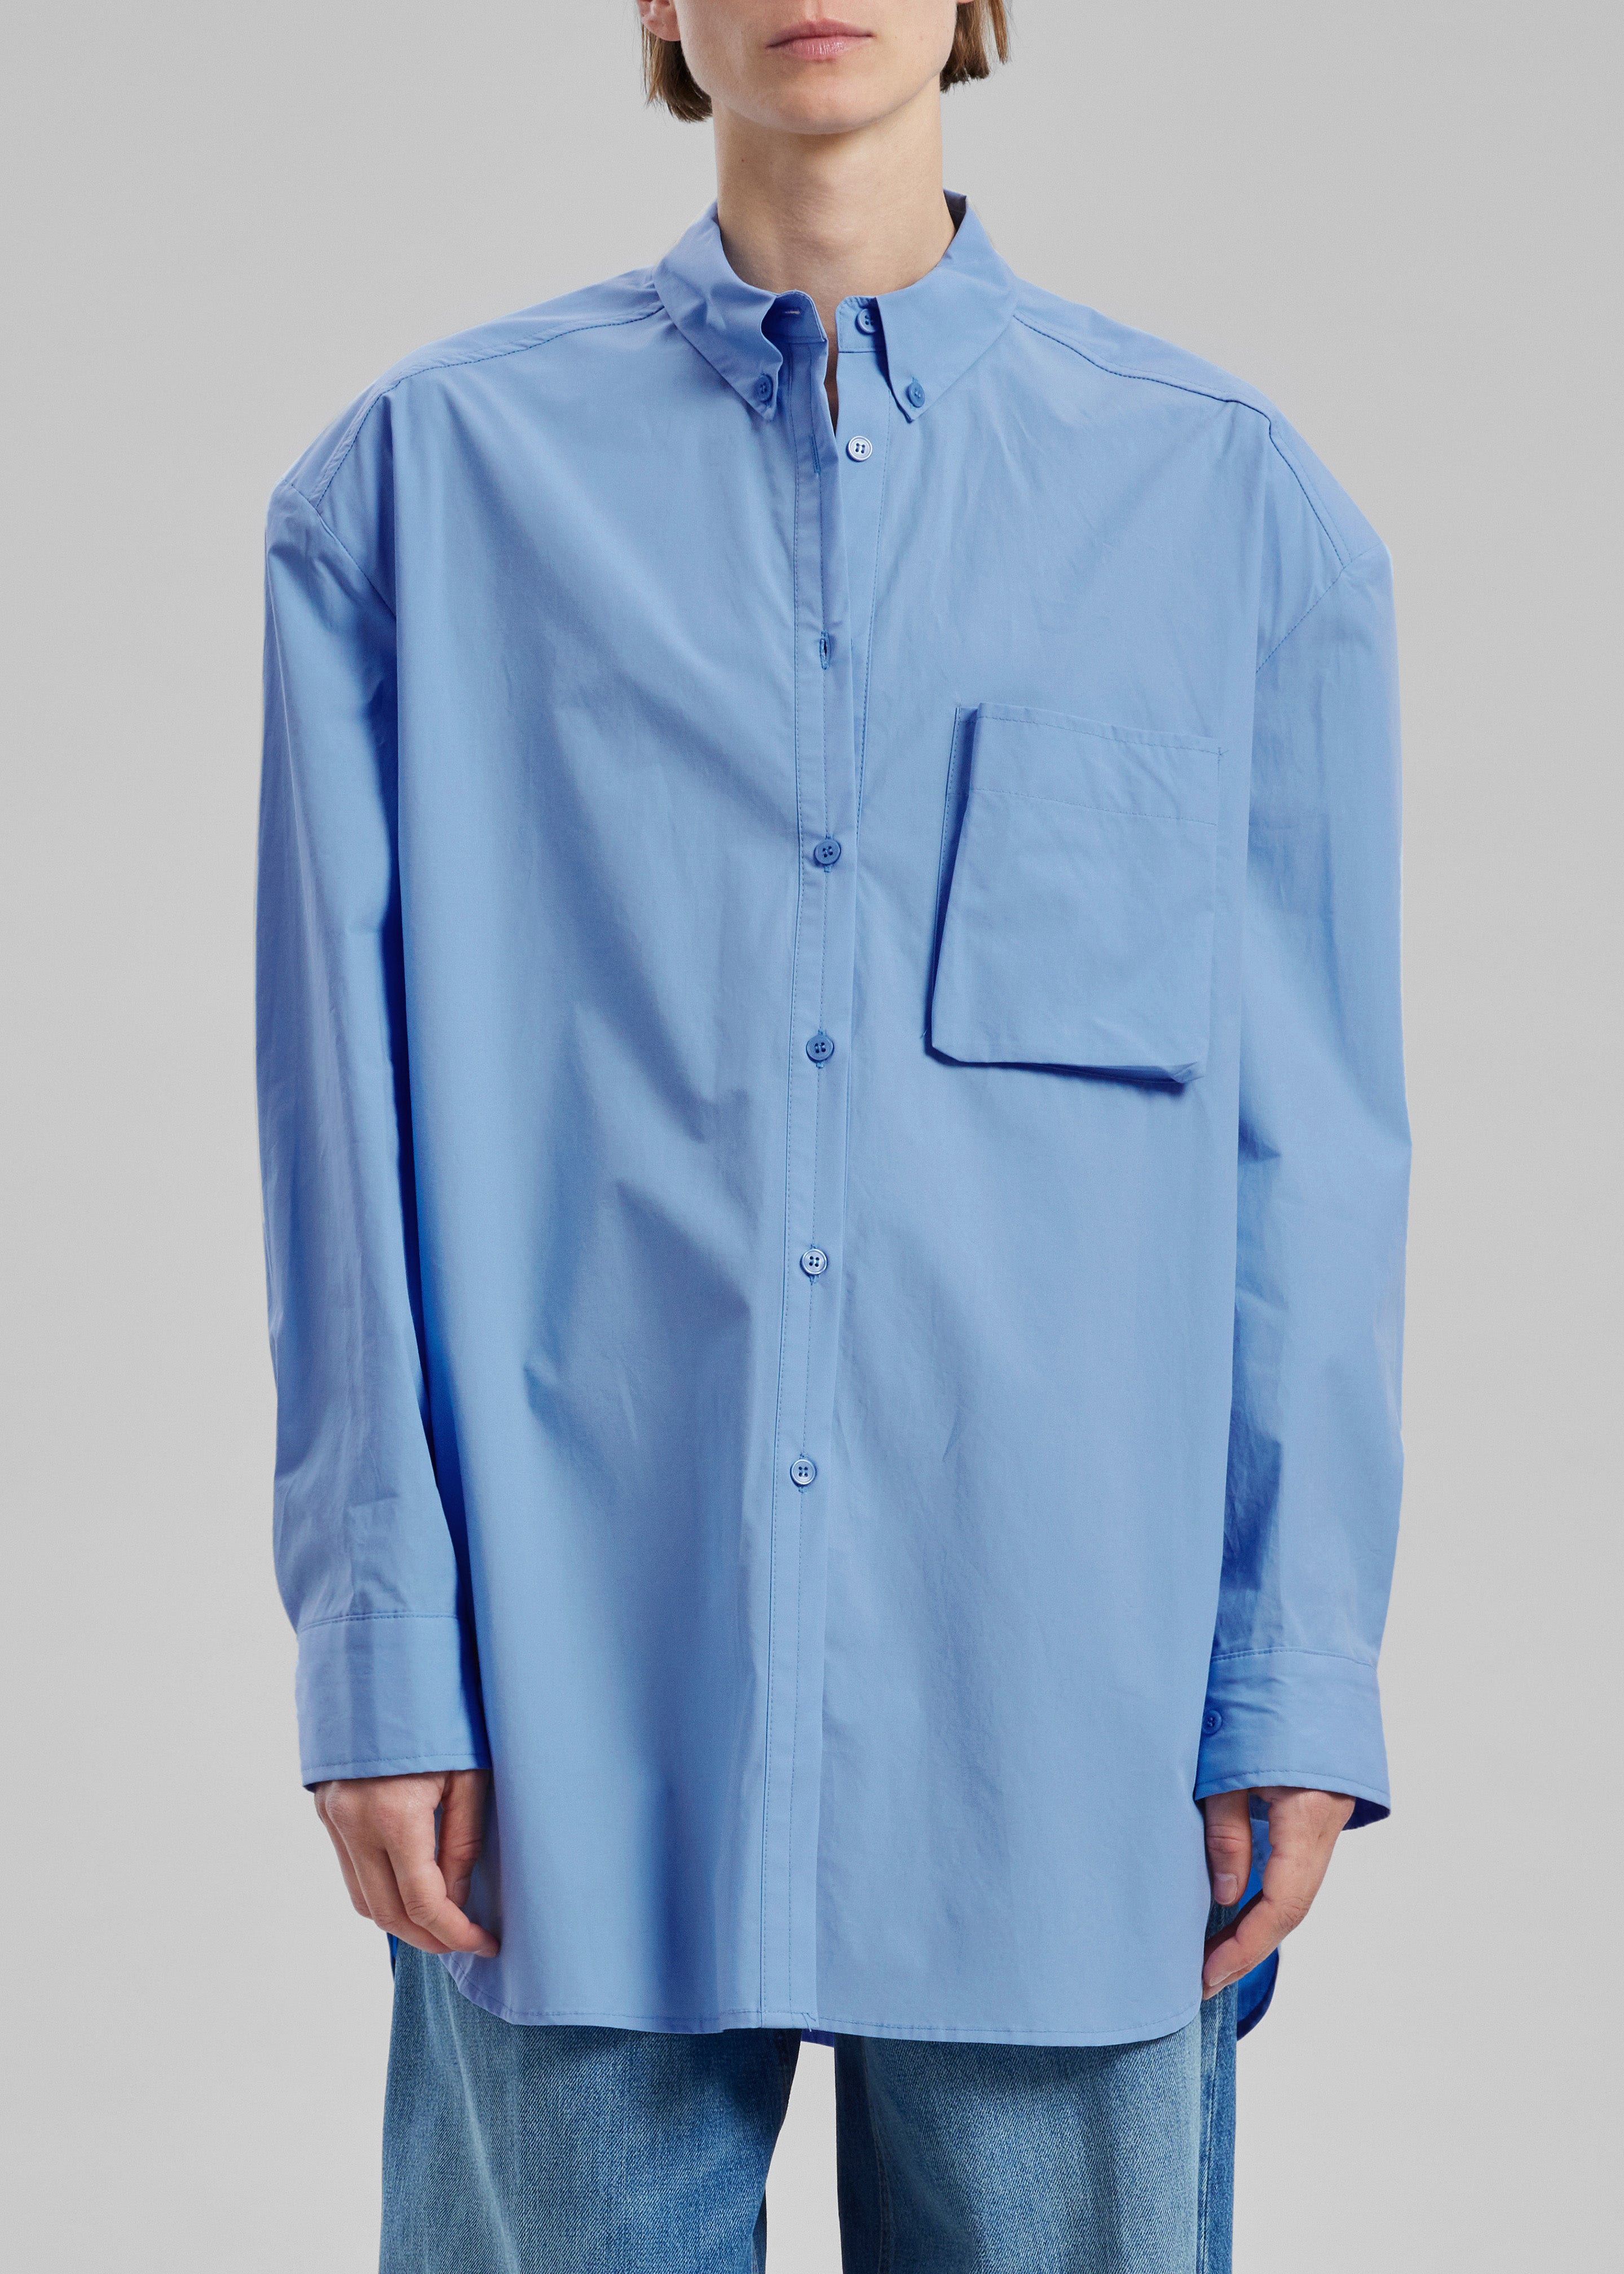 Brenna Padded Button Up Shirt - Blue - 7